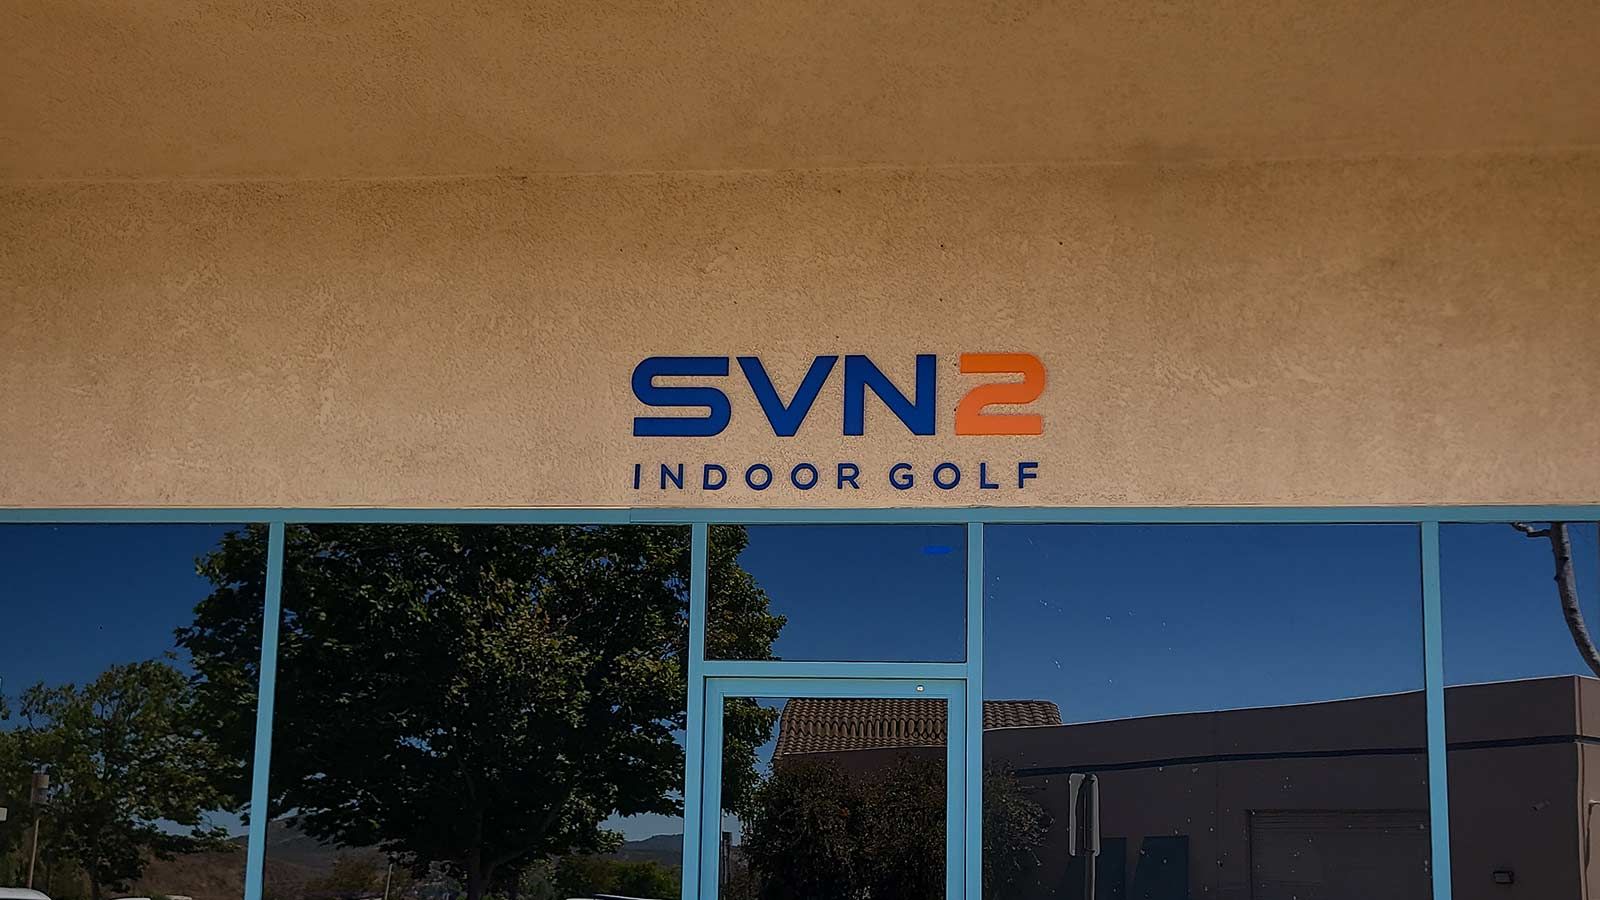 SCRTCH Golf LLC acrylic sign mounted on the facade